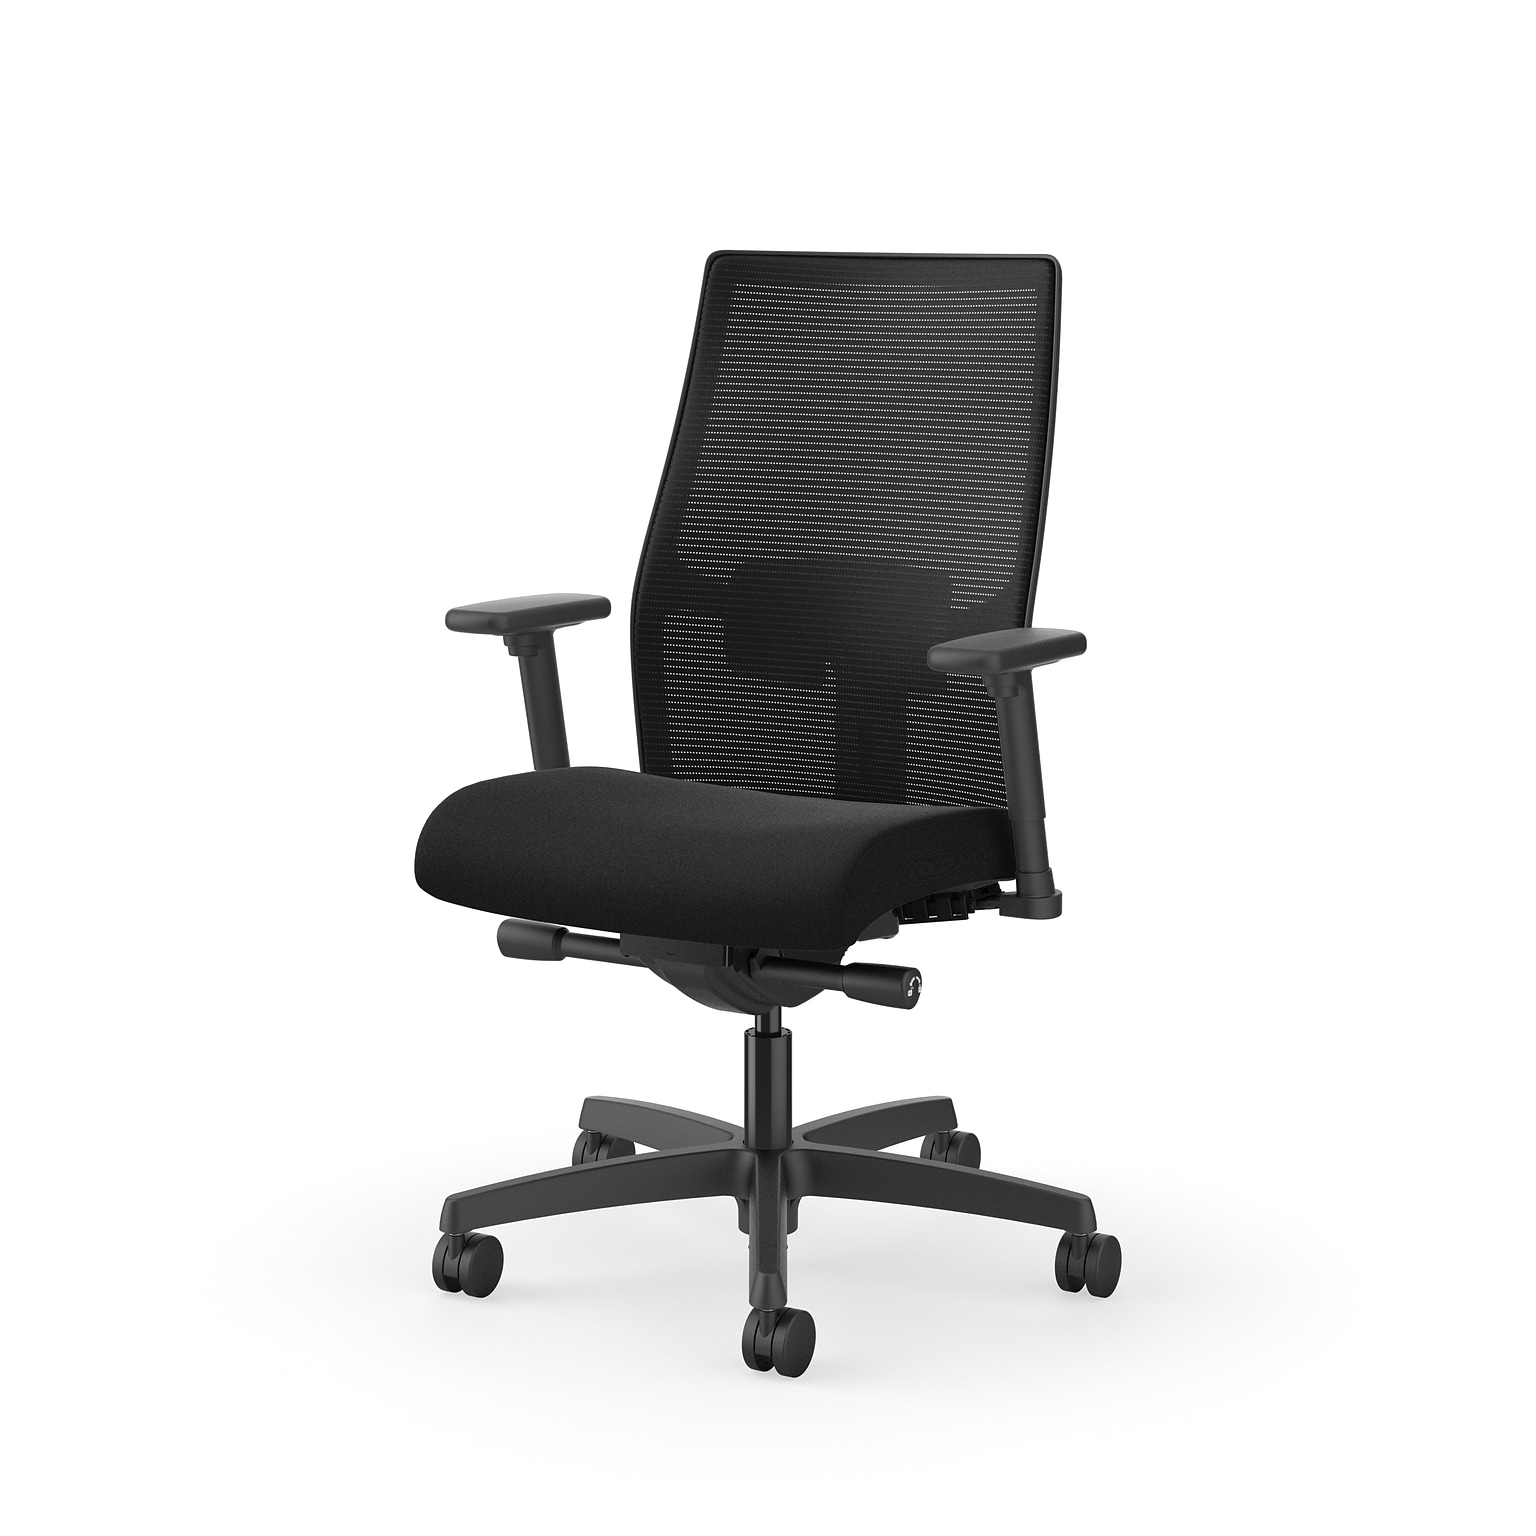 HON Ignition 2.0 Mesh/Fabric Computer and Desk Chair, Black (HONI2MM2AMC10BC)